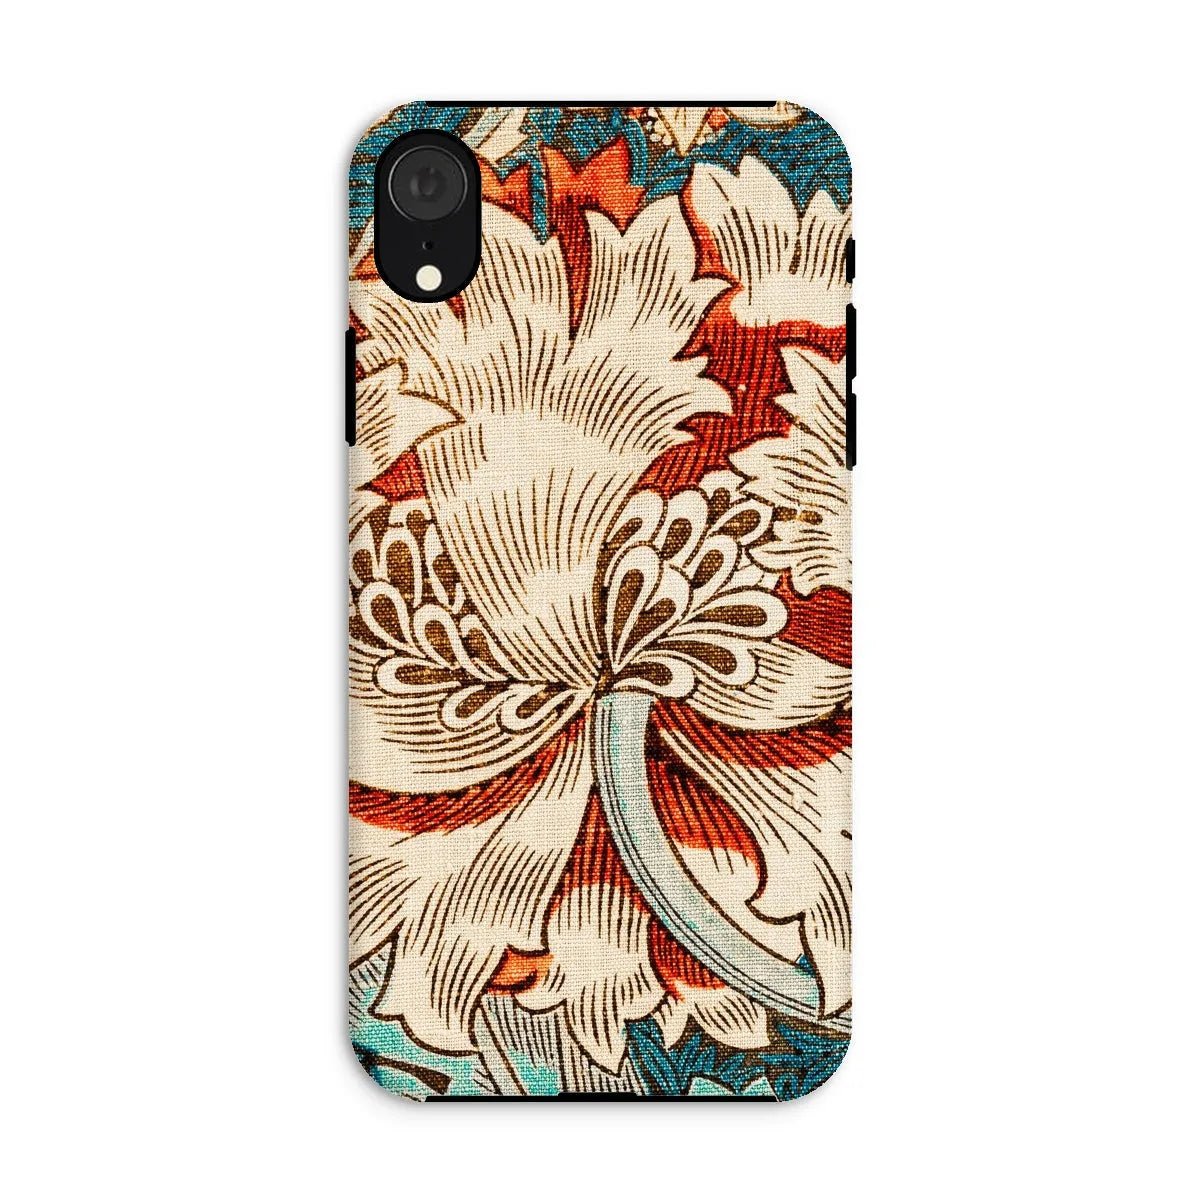 Honeysuckle Too By William Morris Phone Case - Iphone Xr / Matte - Mobile Phone Cases - Aesthetic Art